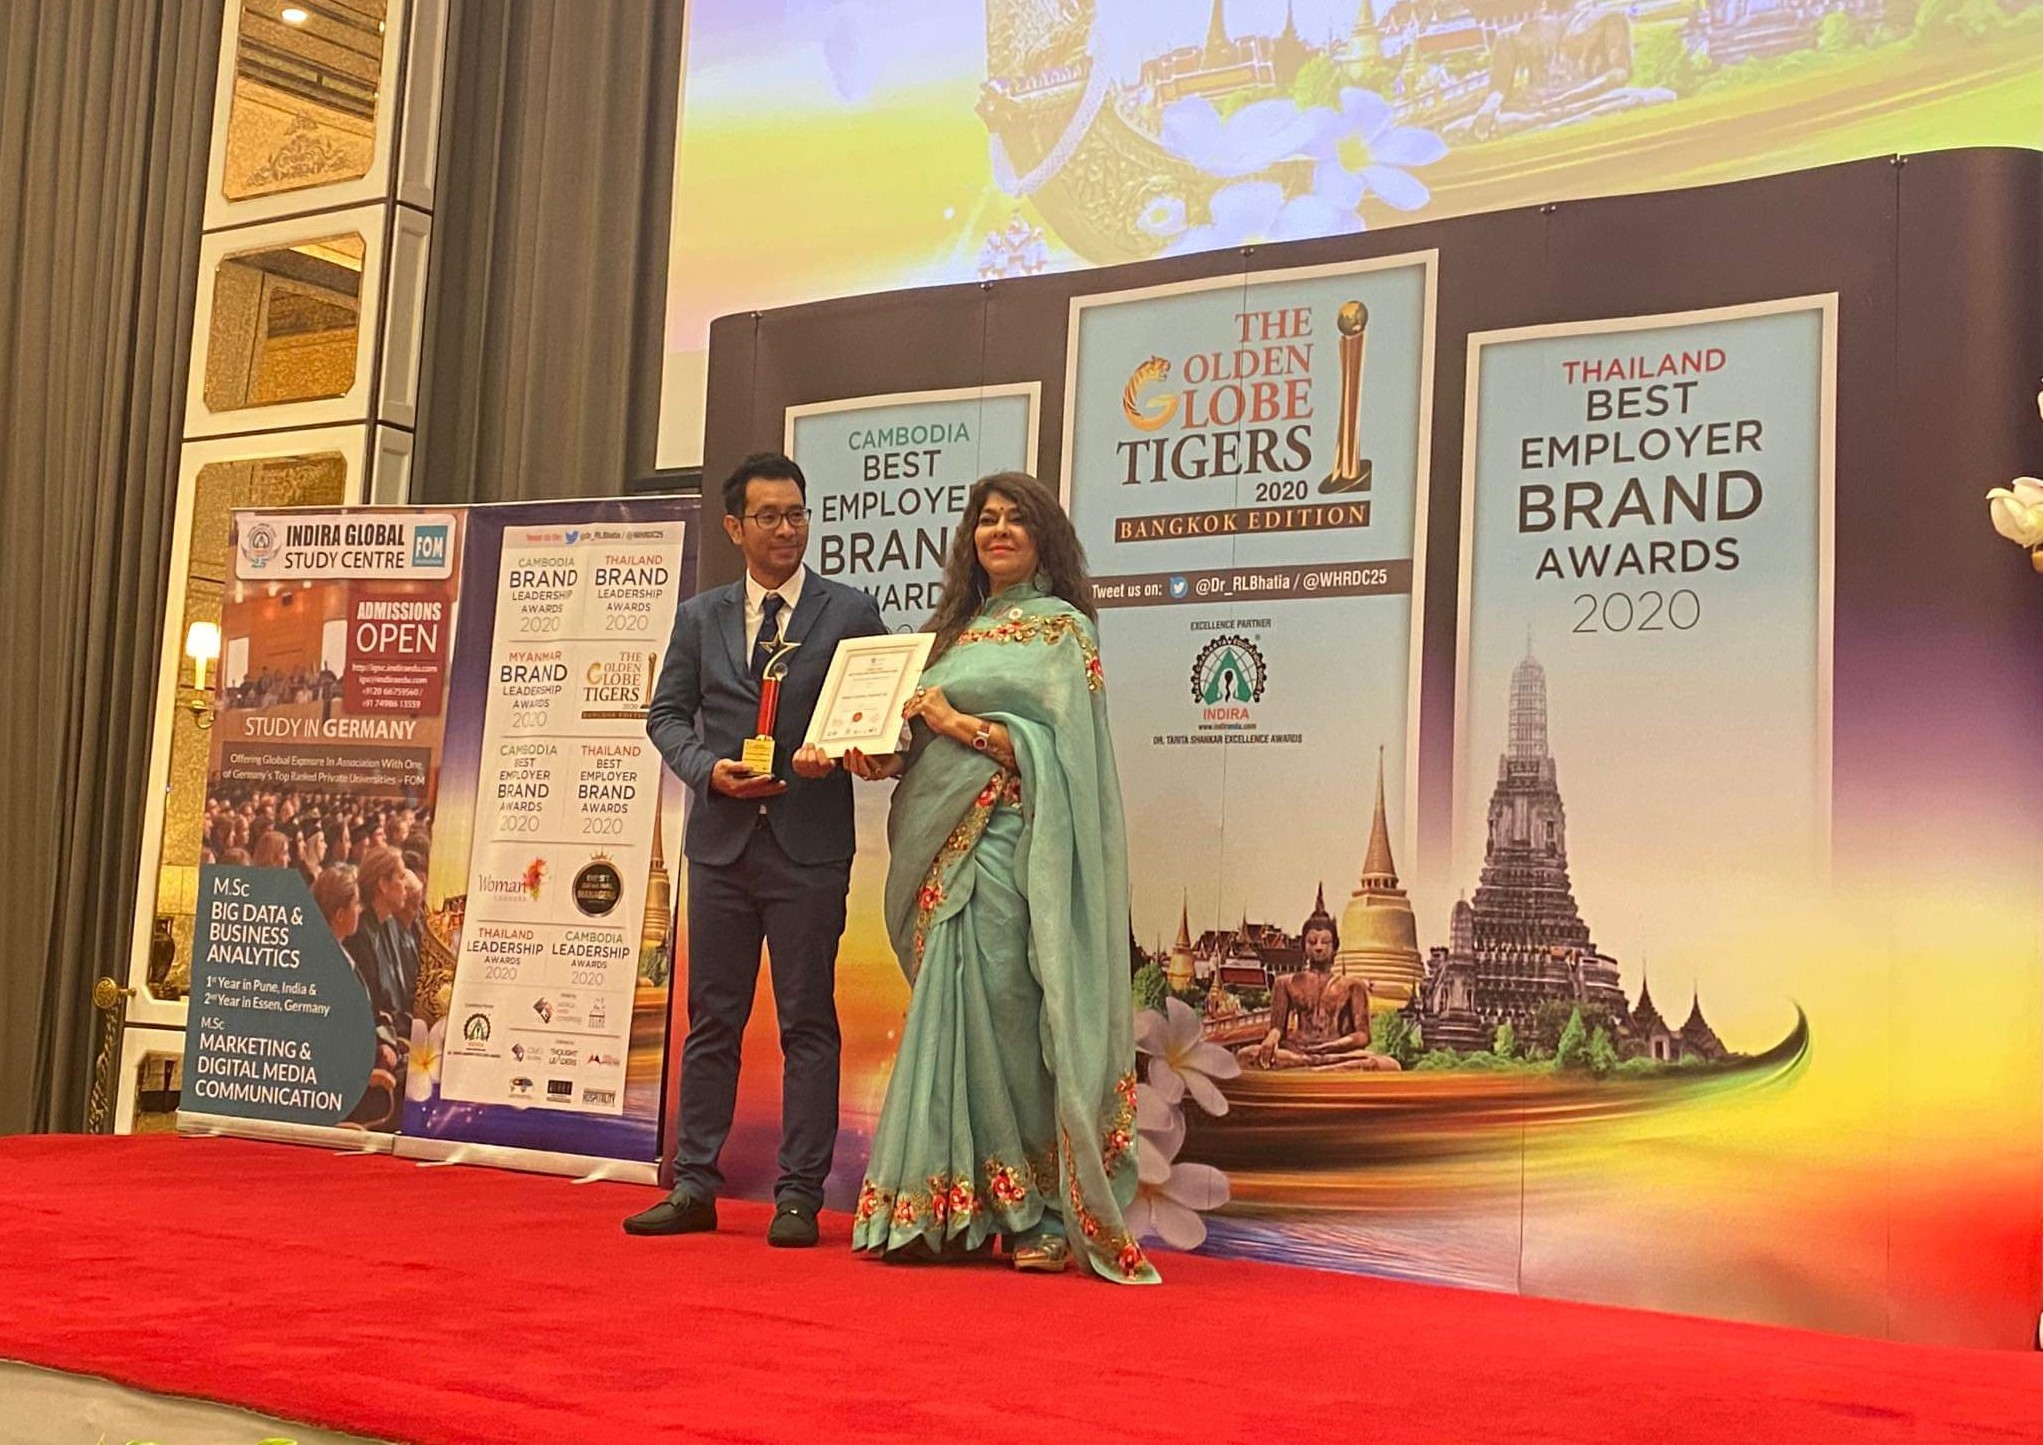 Receiving Thailand Best Employer Award 2020